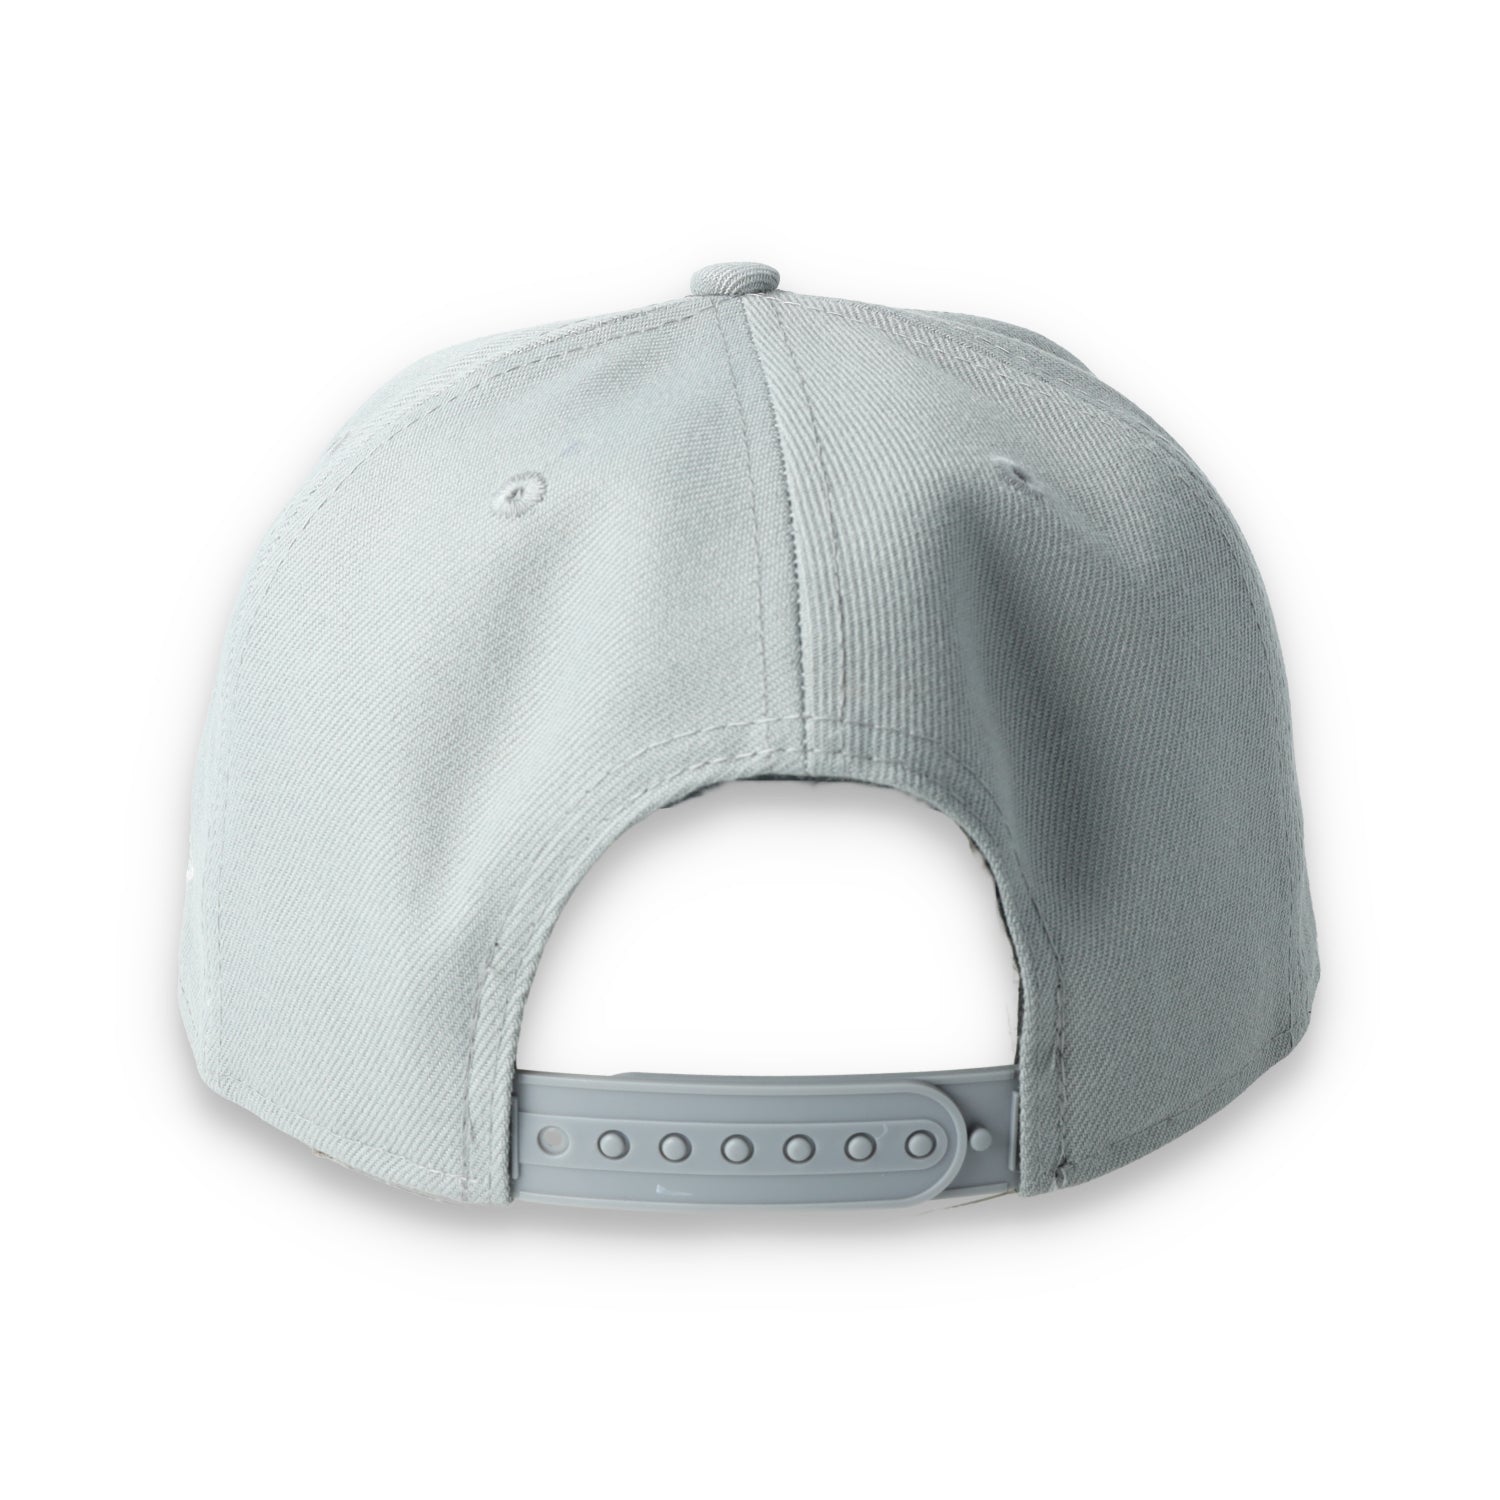 New Era Sacramento Kings  State Logo 9FIFTY Snapback Hat